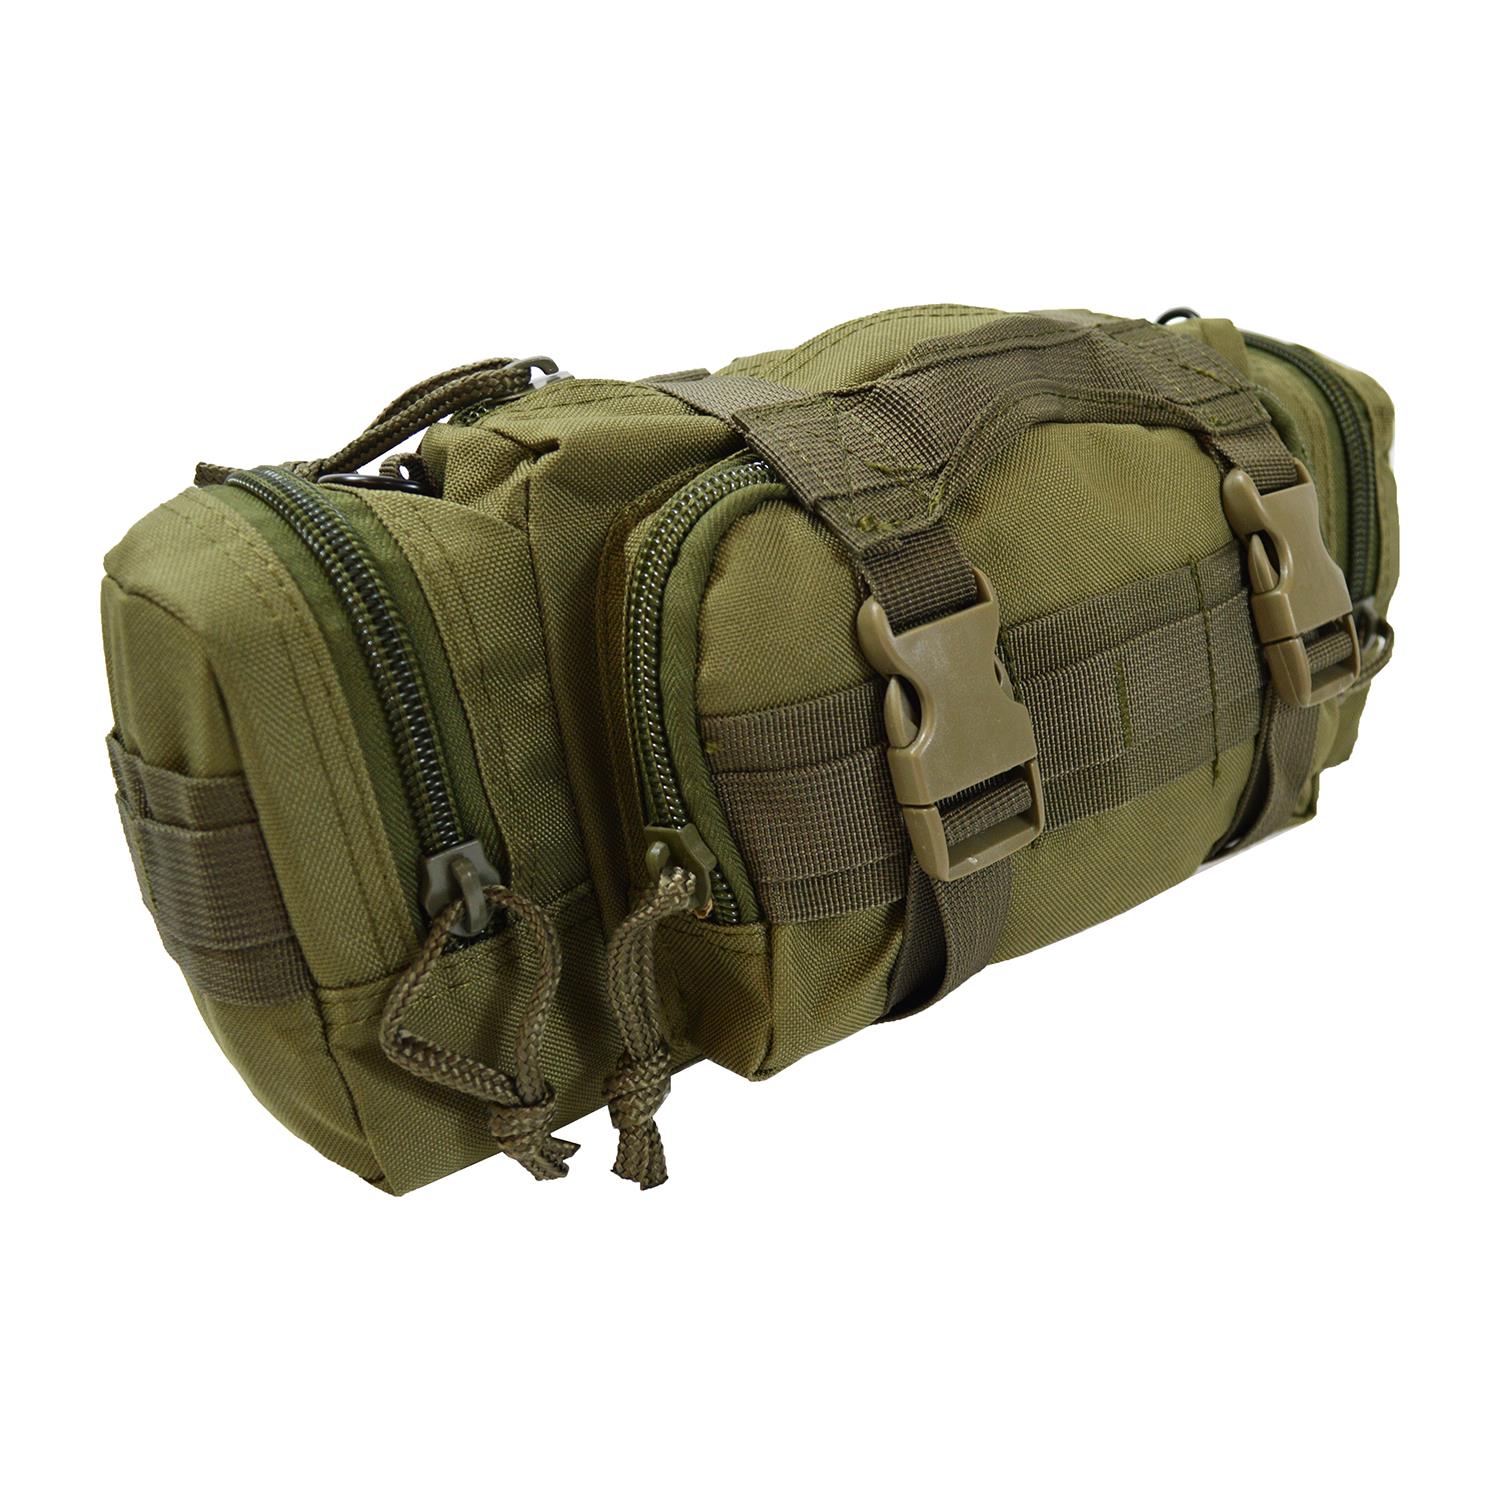 Every Day Carry TC15 Nylon Deployment Bag w/ Molle Straps   Black